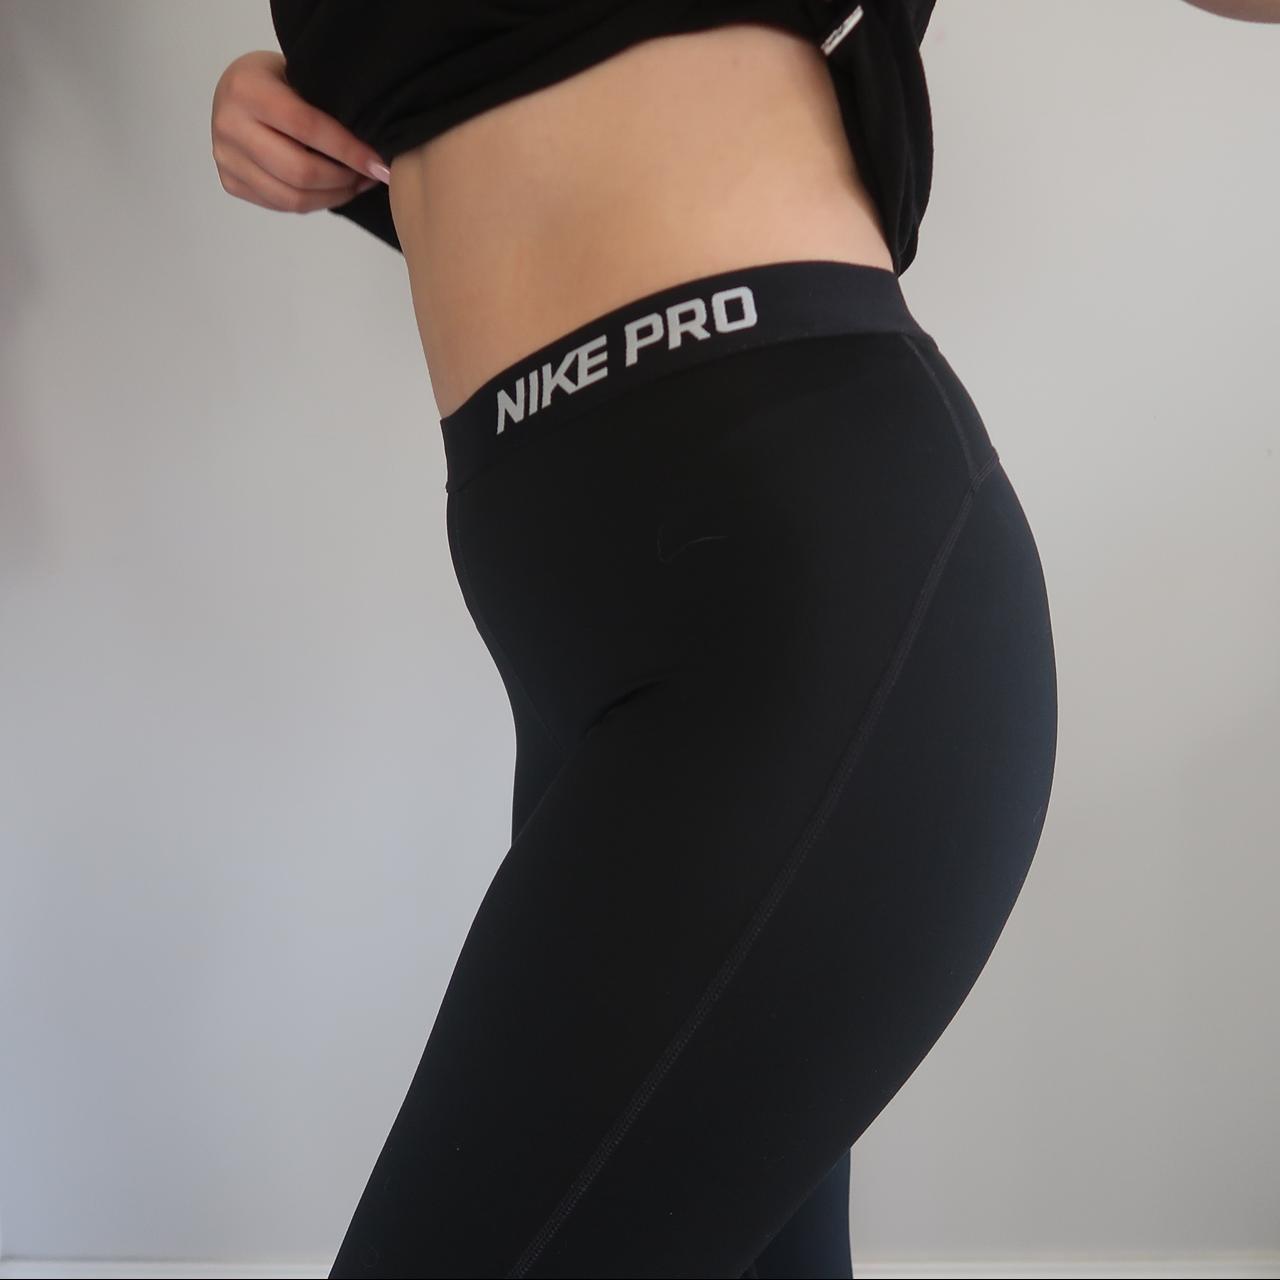 Nike pro leggings #nike #leggings - Depop